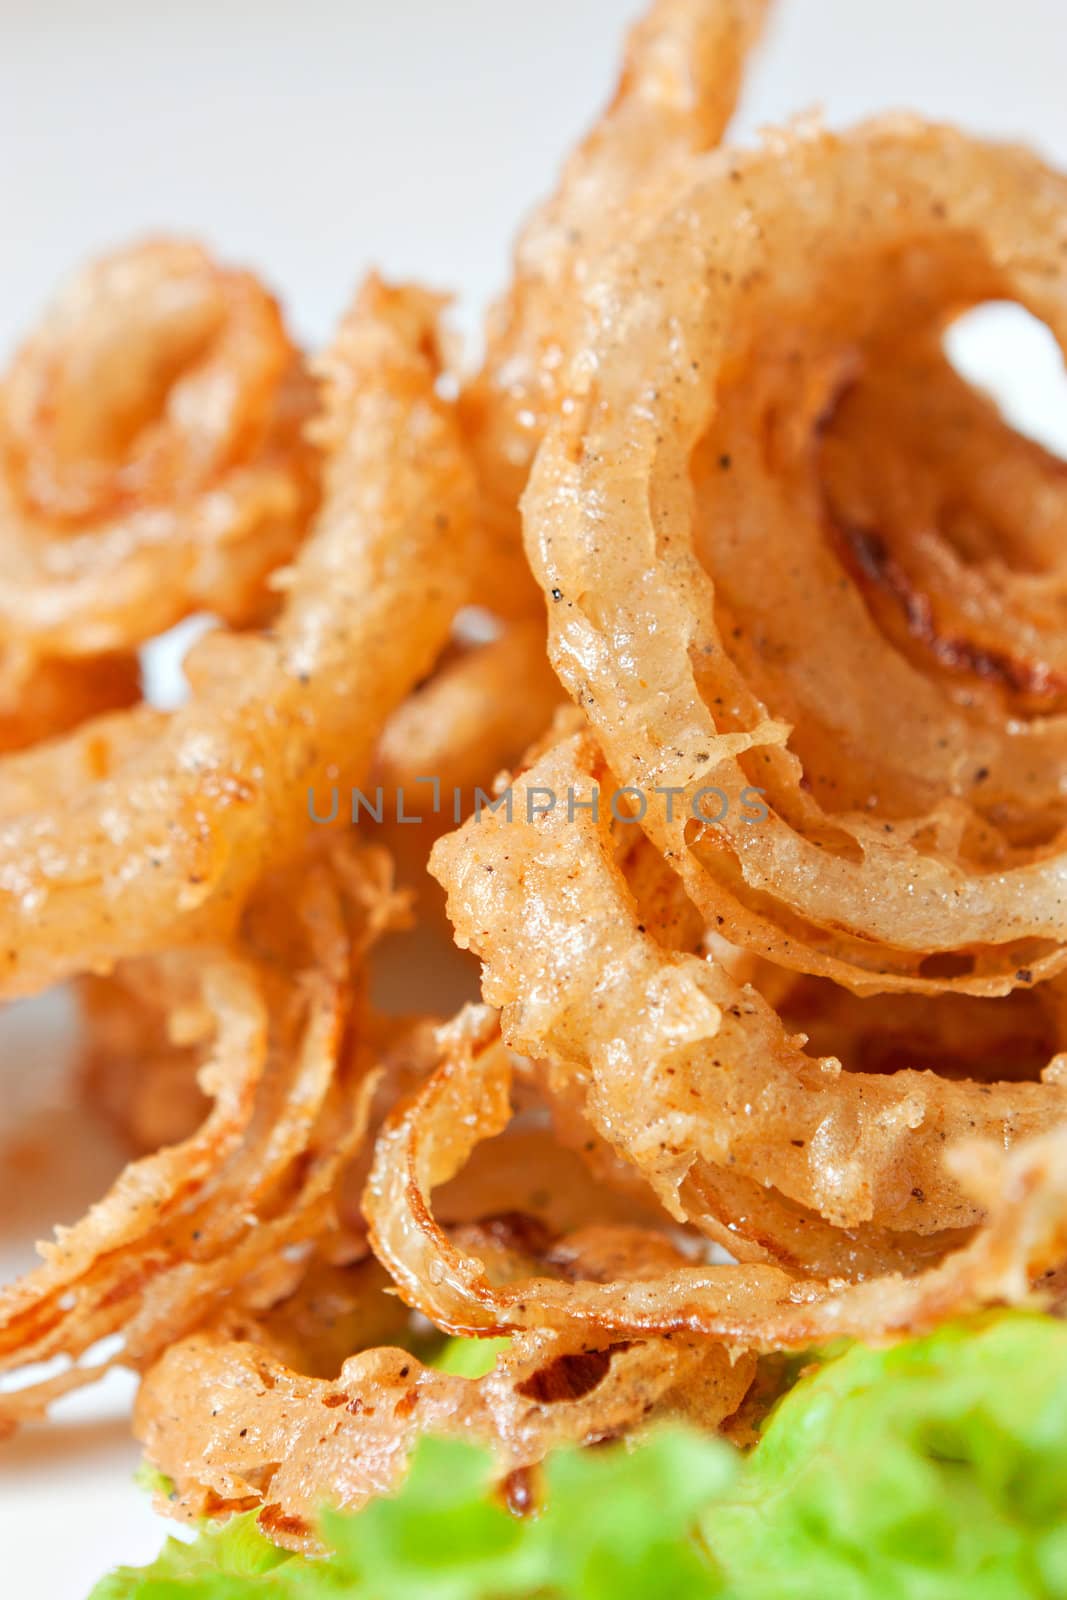 onion rings dish by nigerfoxy